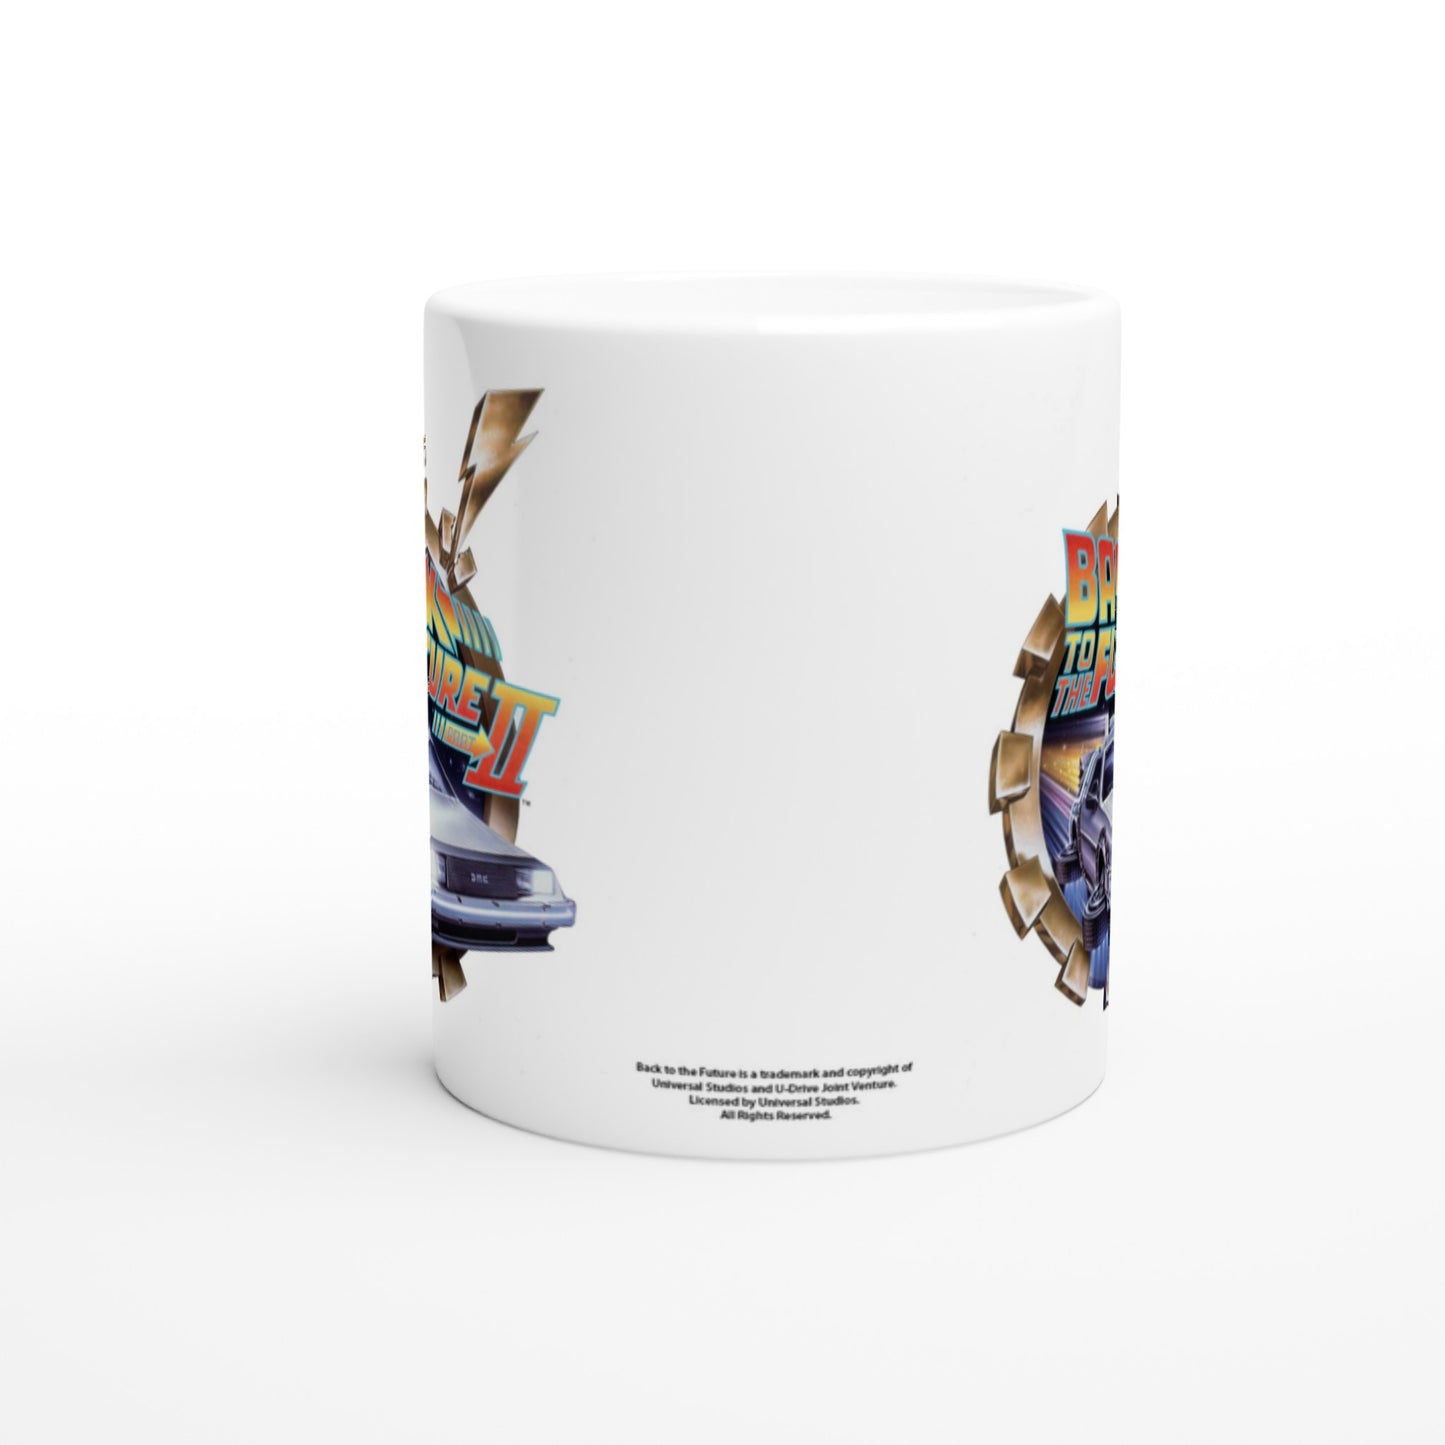 Official Back To The Future II Mug - BTTF II logo - 330ml White Mug